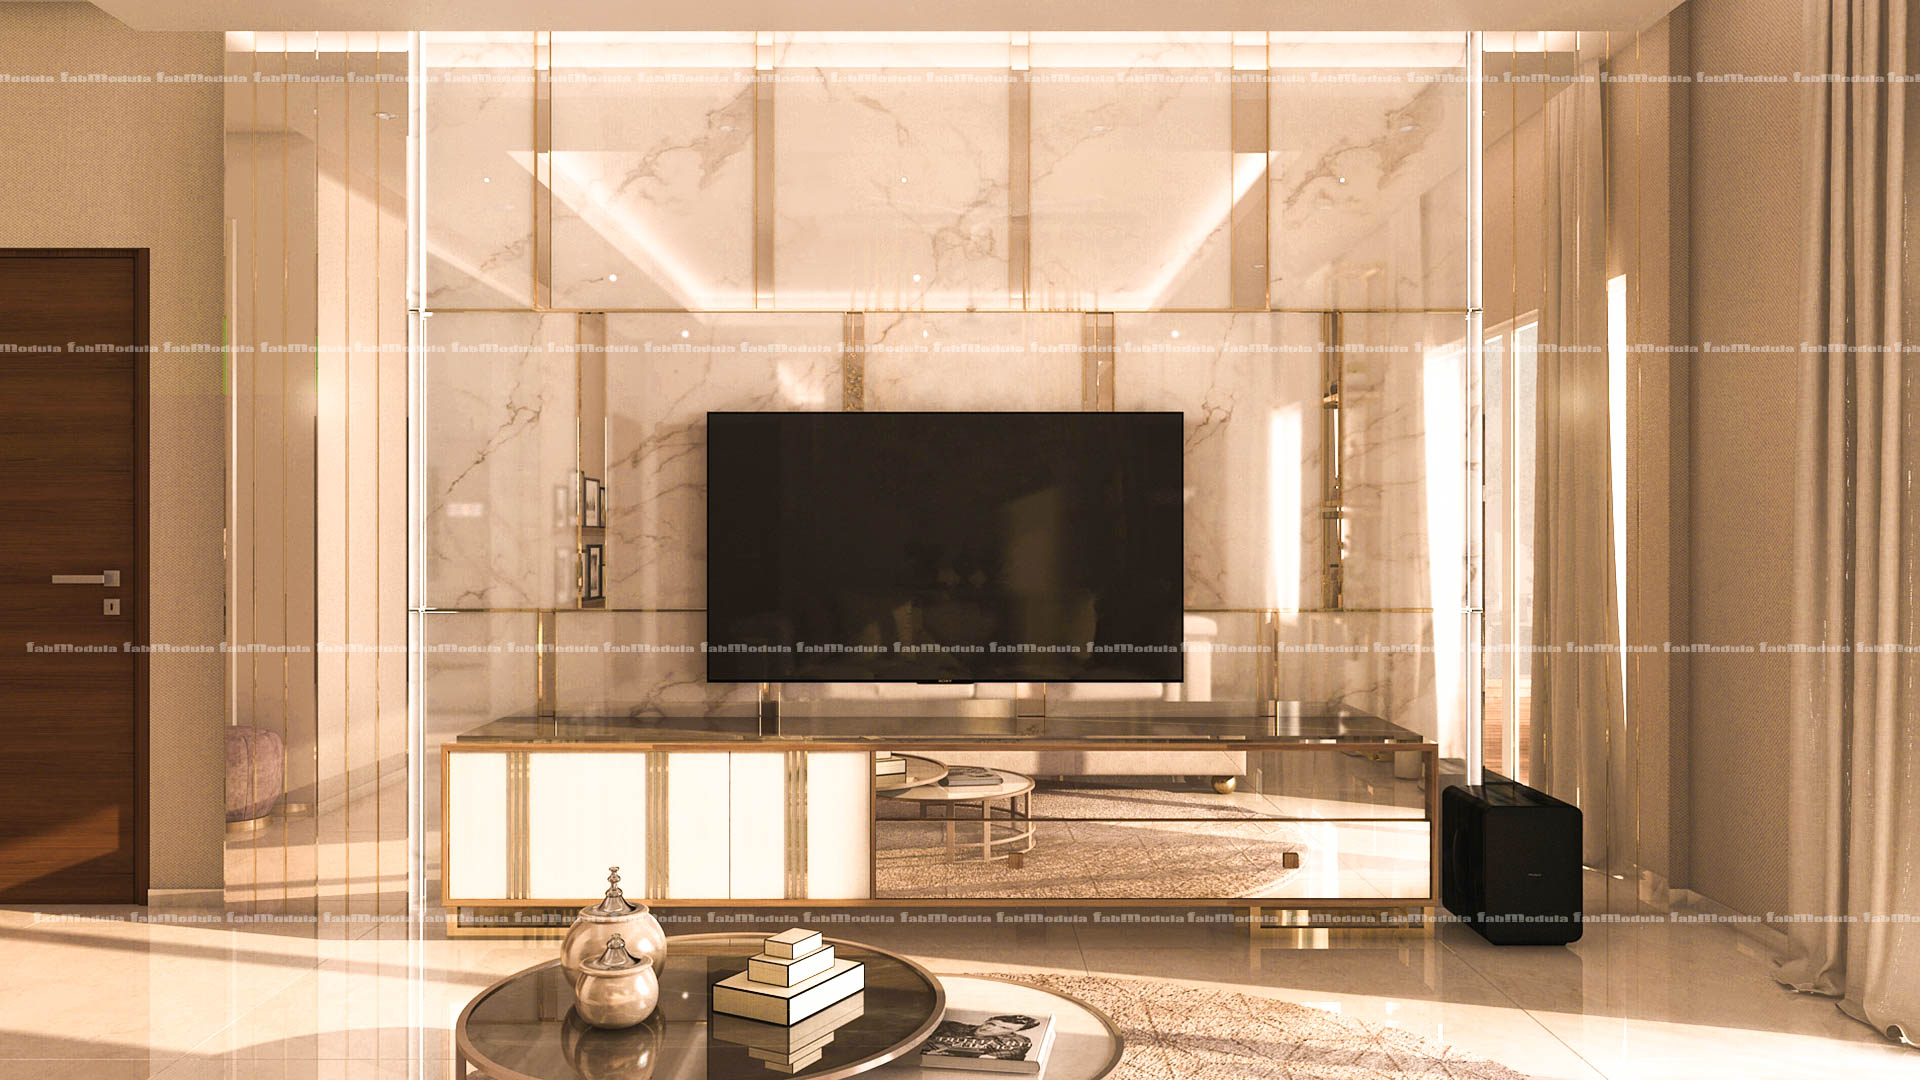 FabModula modern living room interior with tv and sofa set